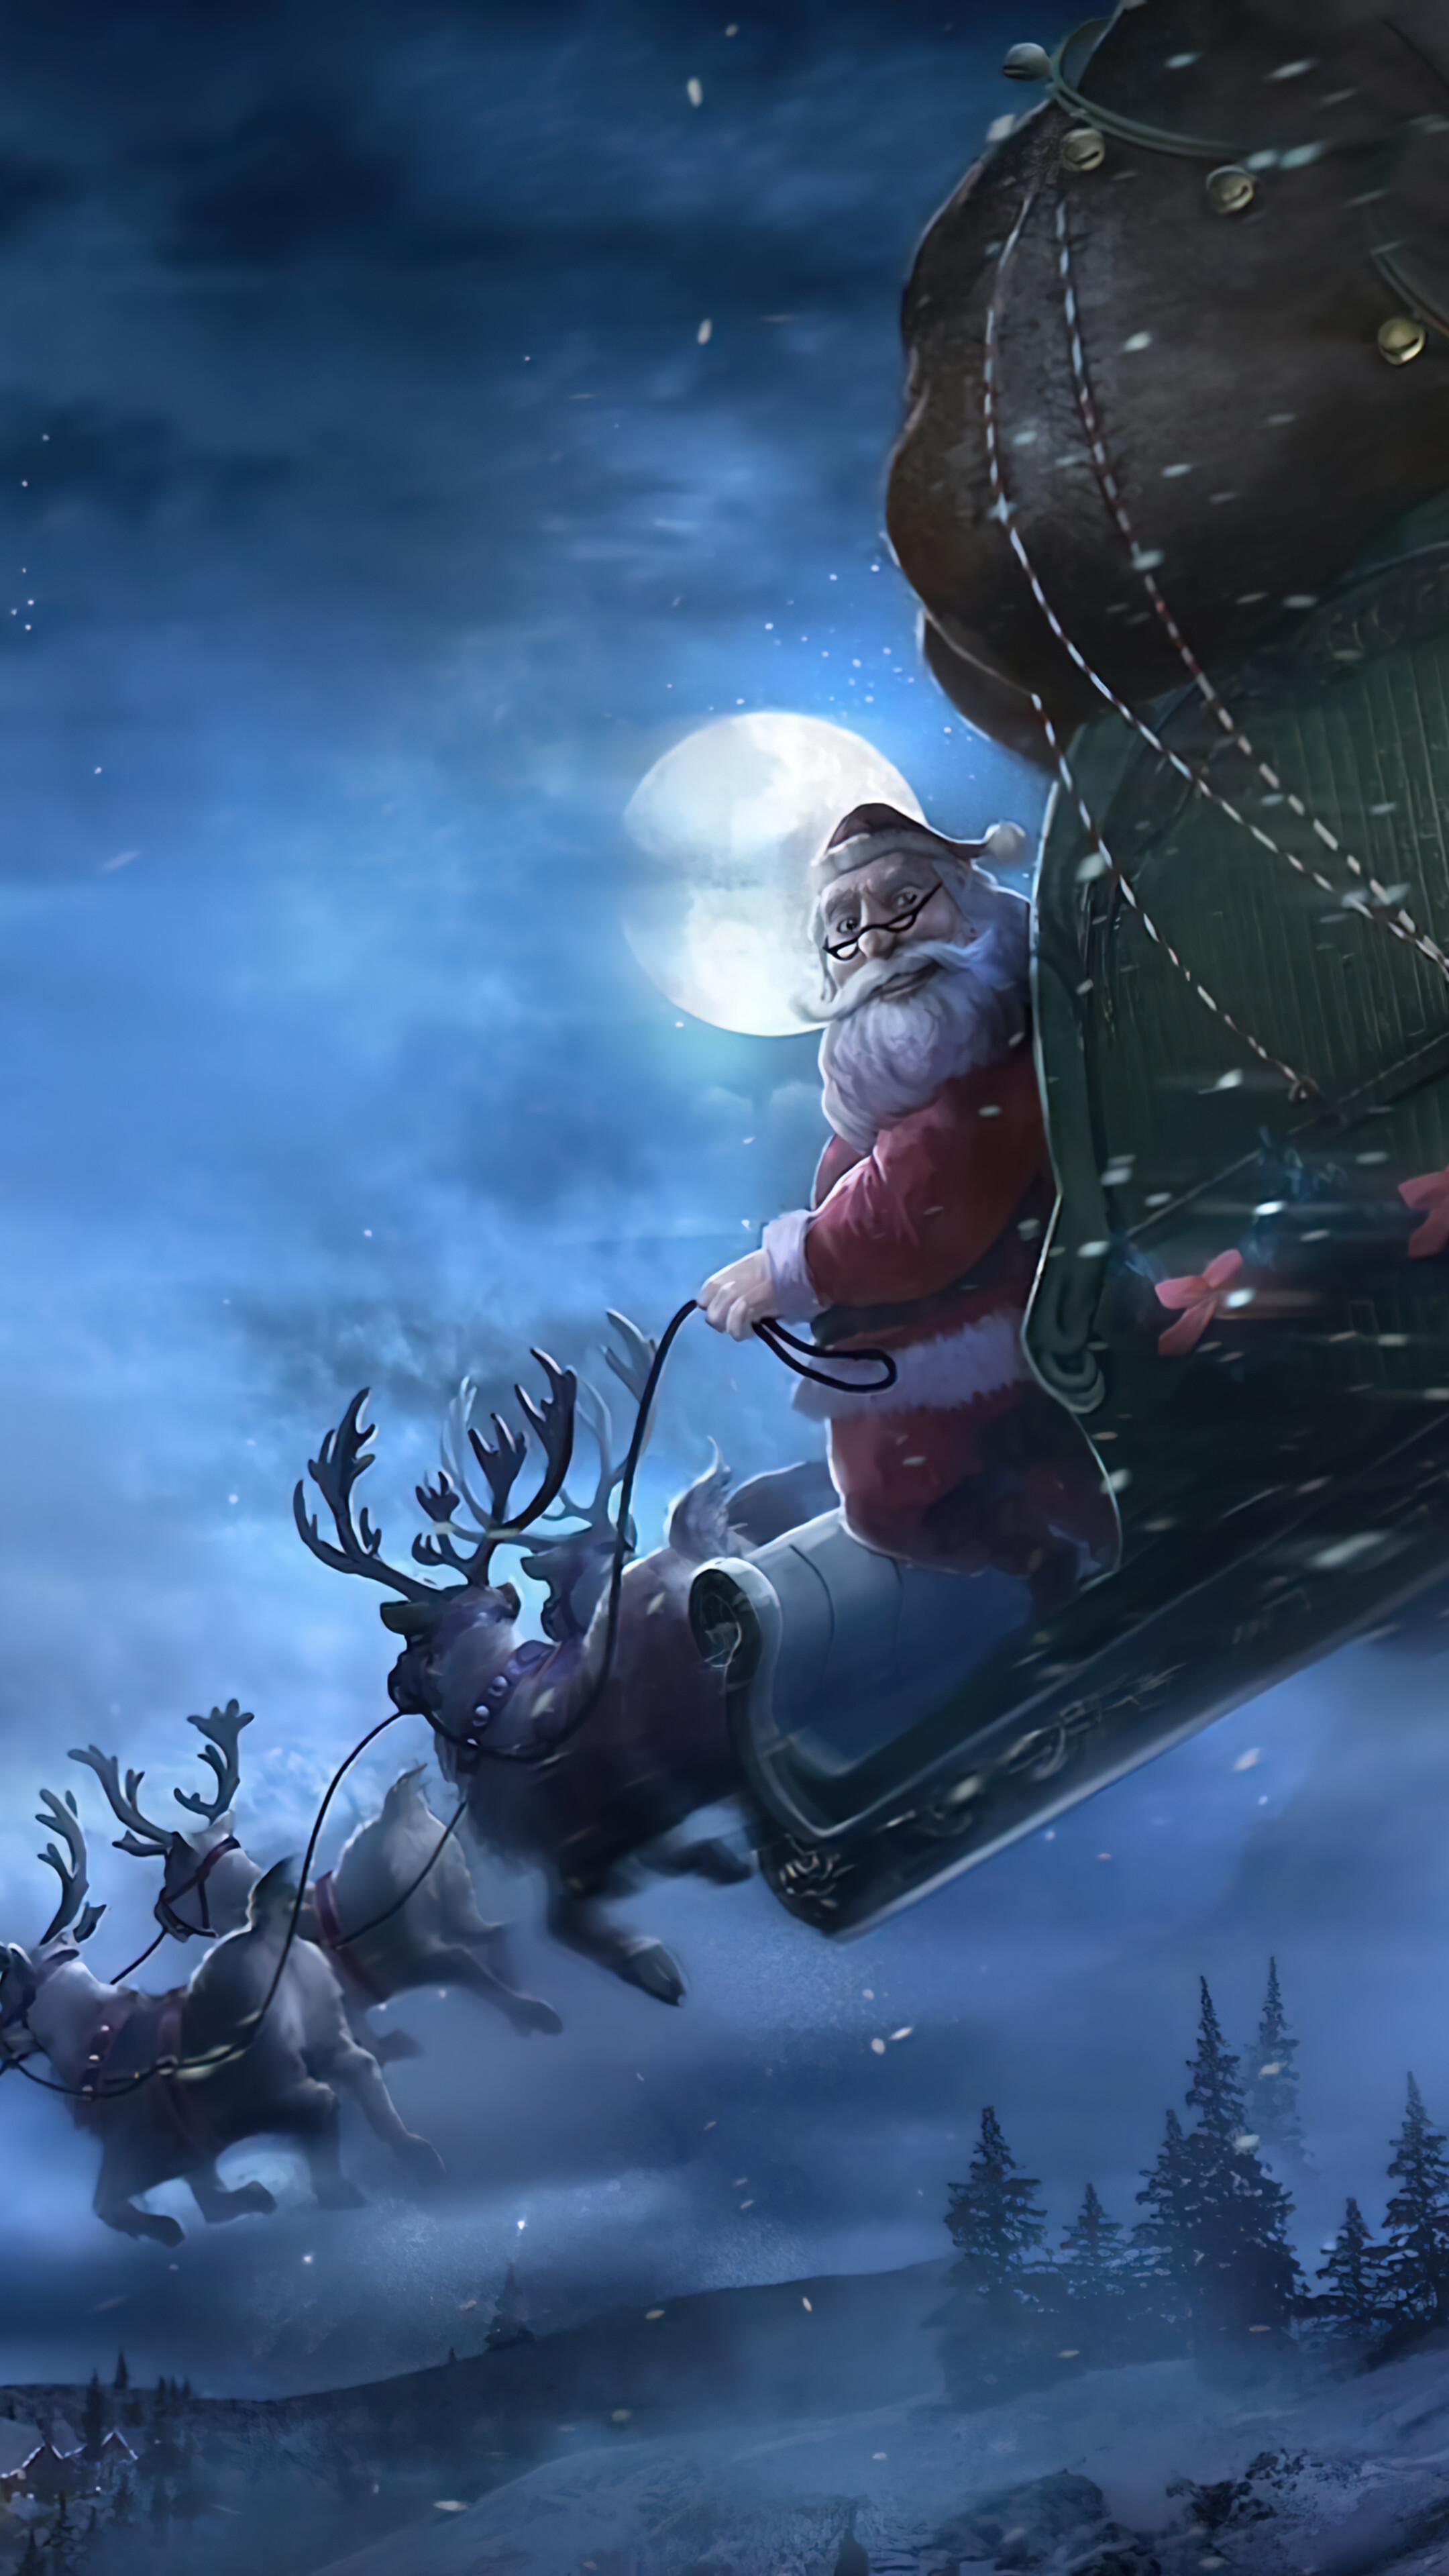 Santa Claus Reindeer Sleigh Christmas Gift Wallpaper iPhone Phone